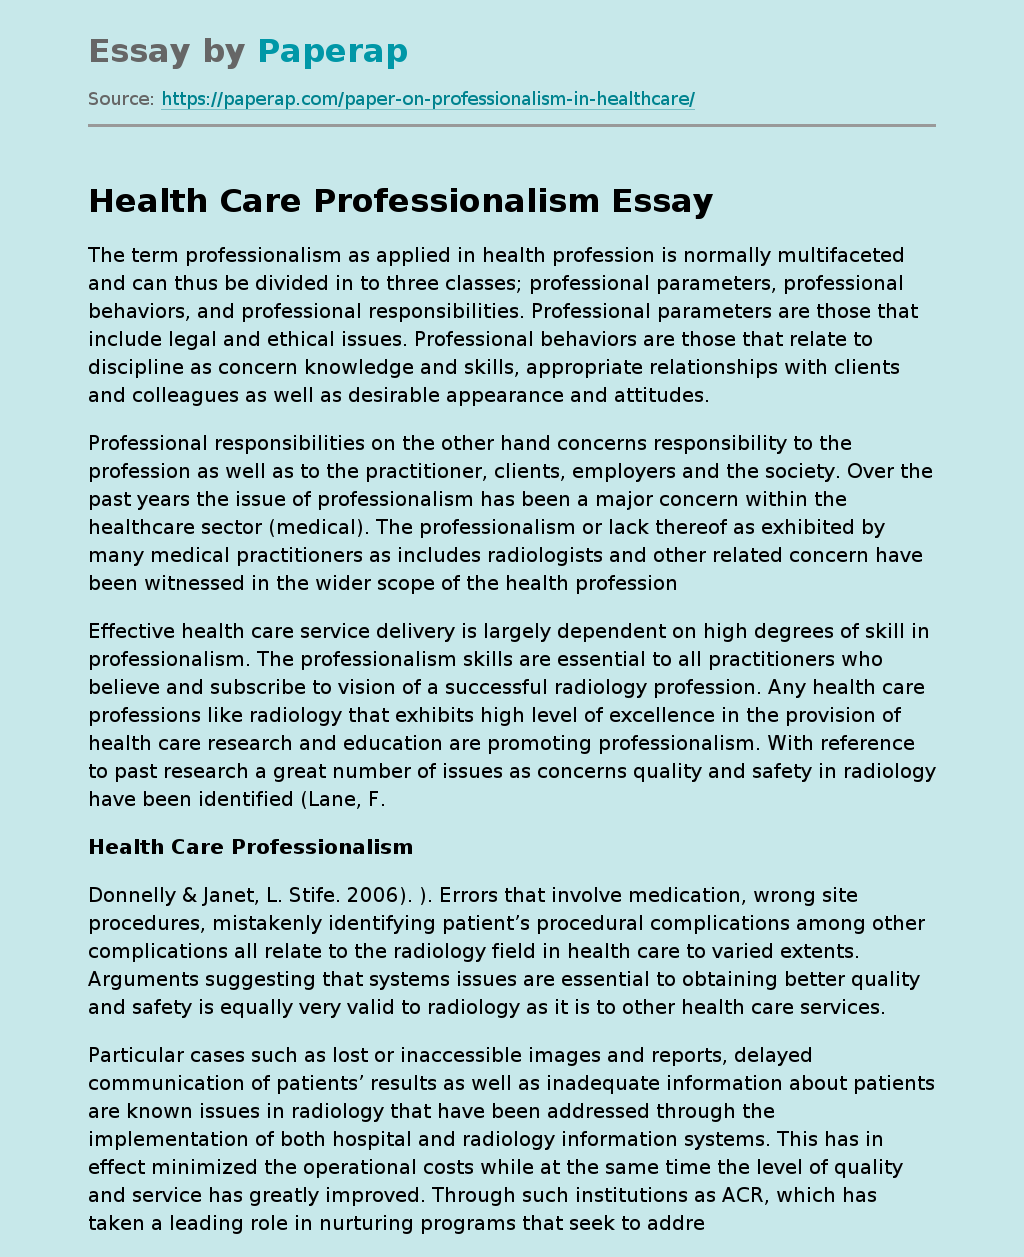 Health Care Professionalism